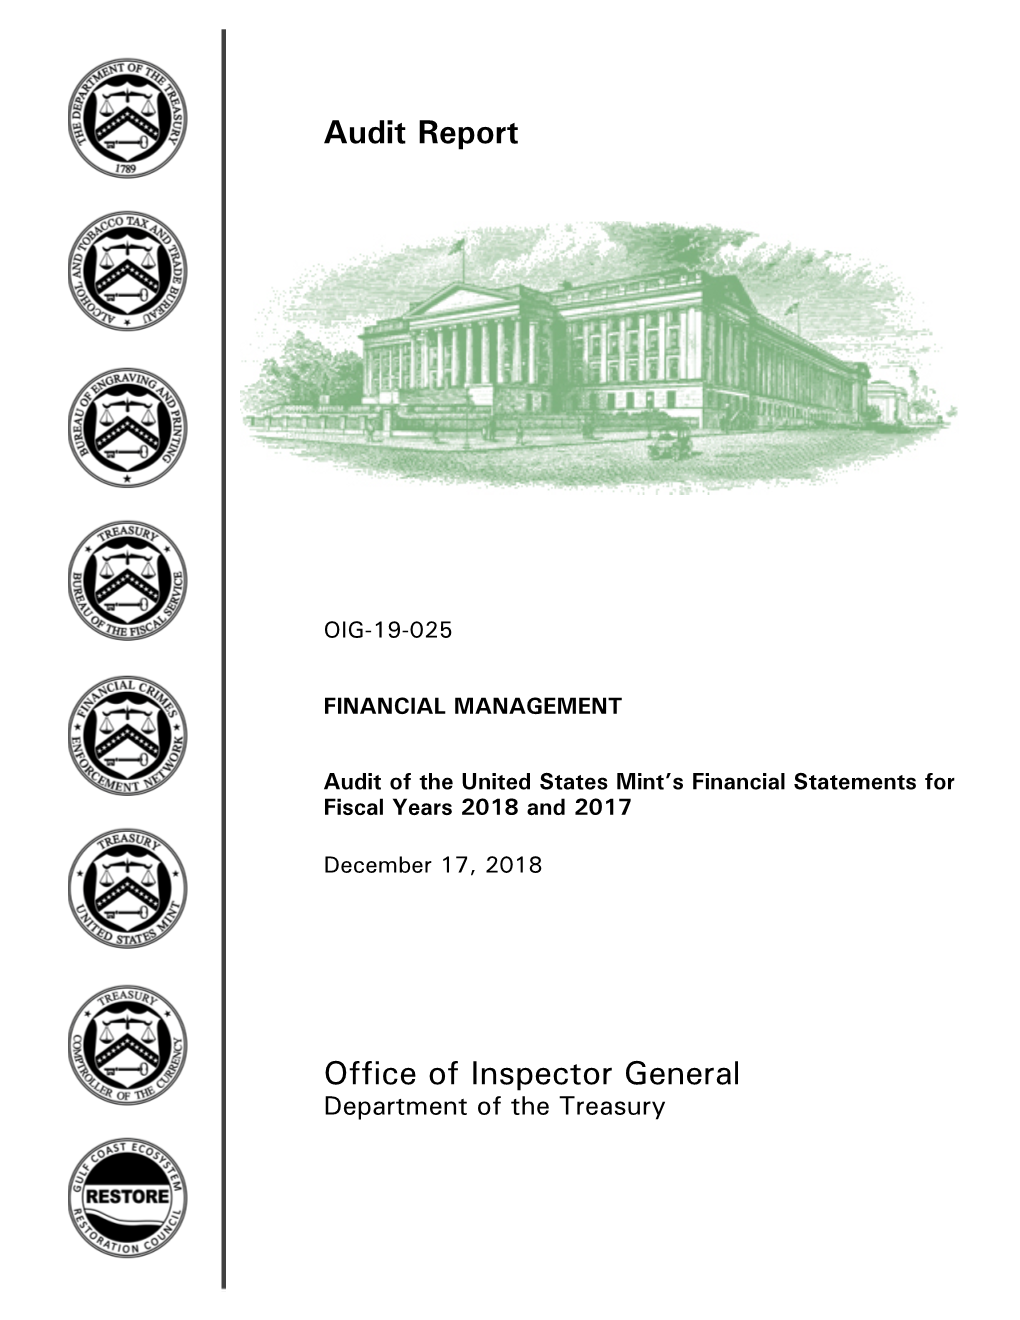 OIG Audit Report on US Mint